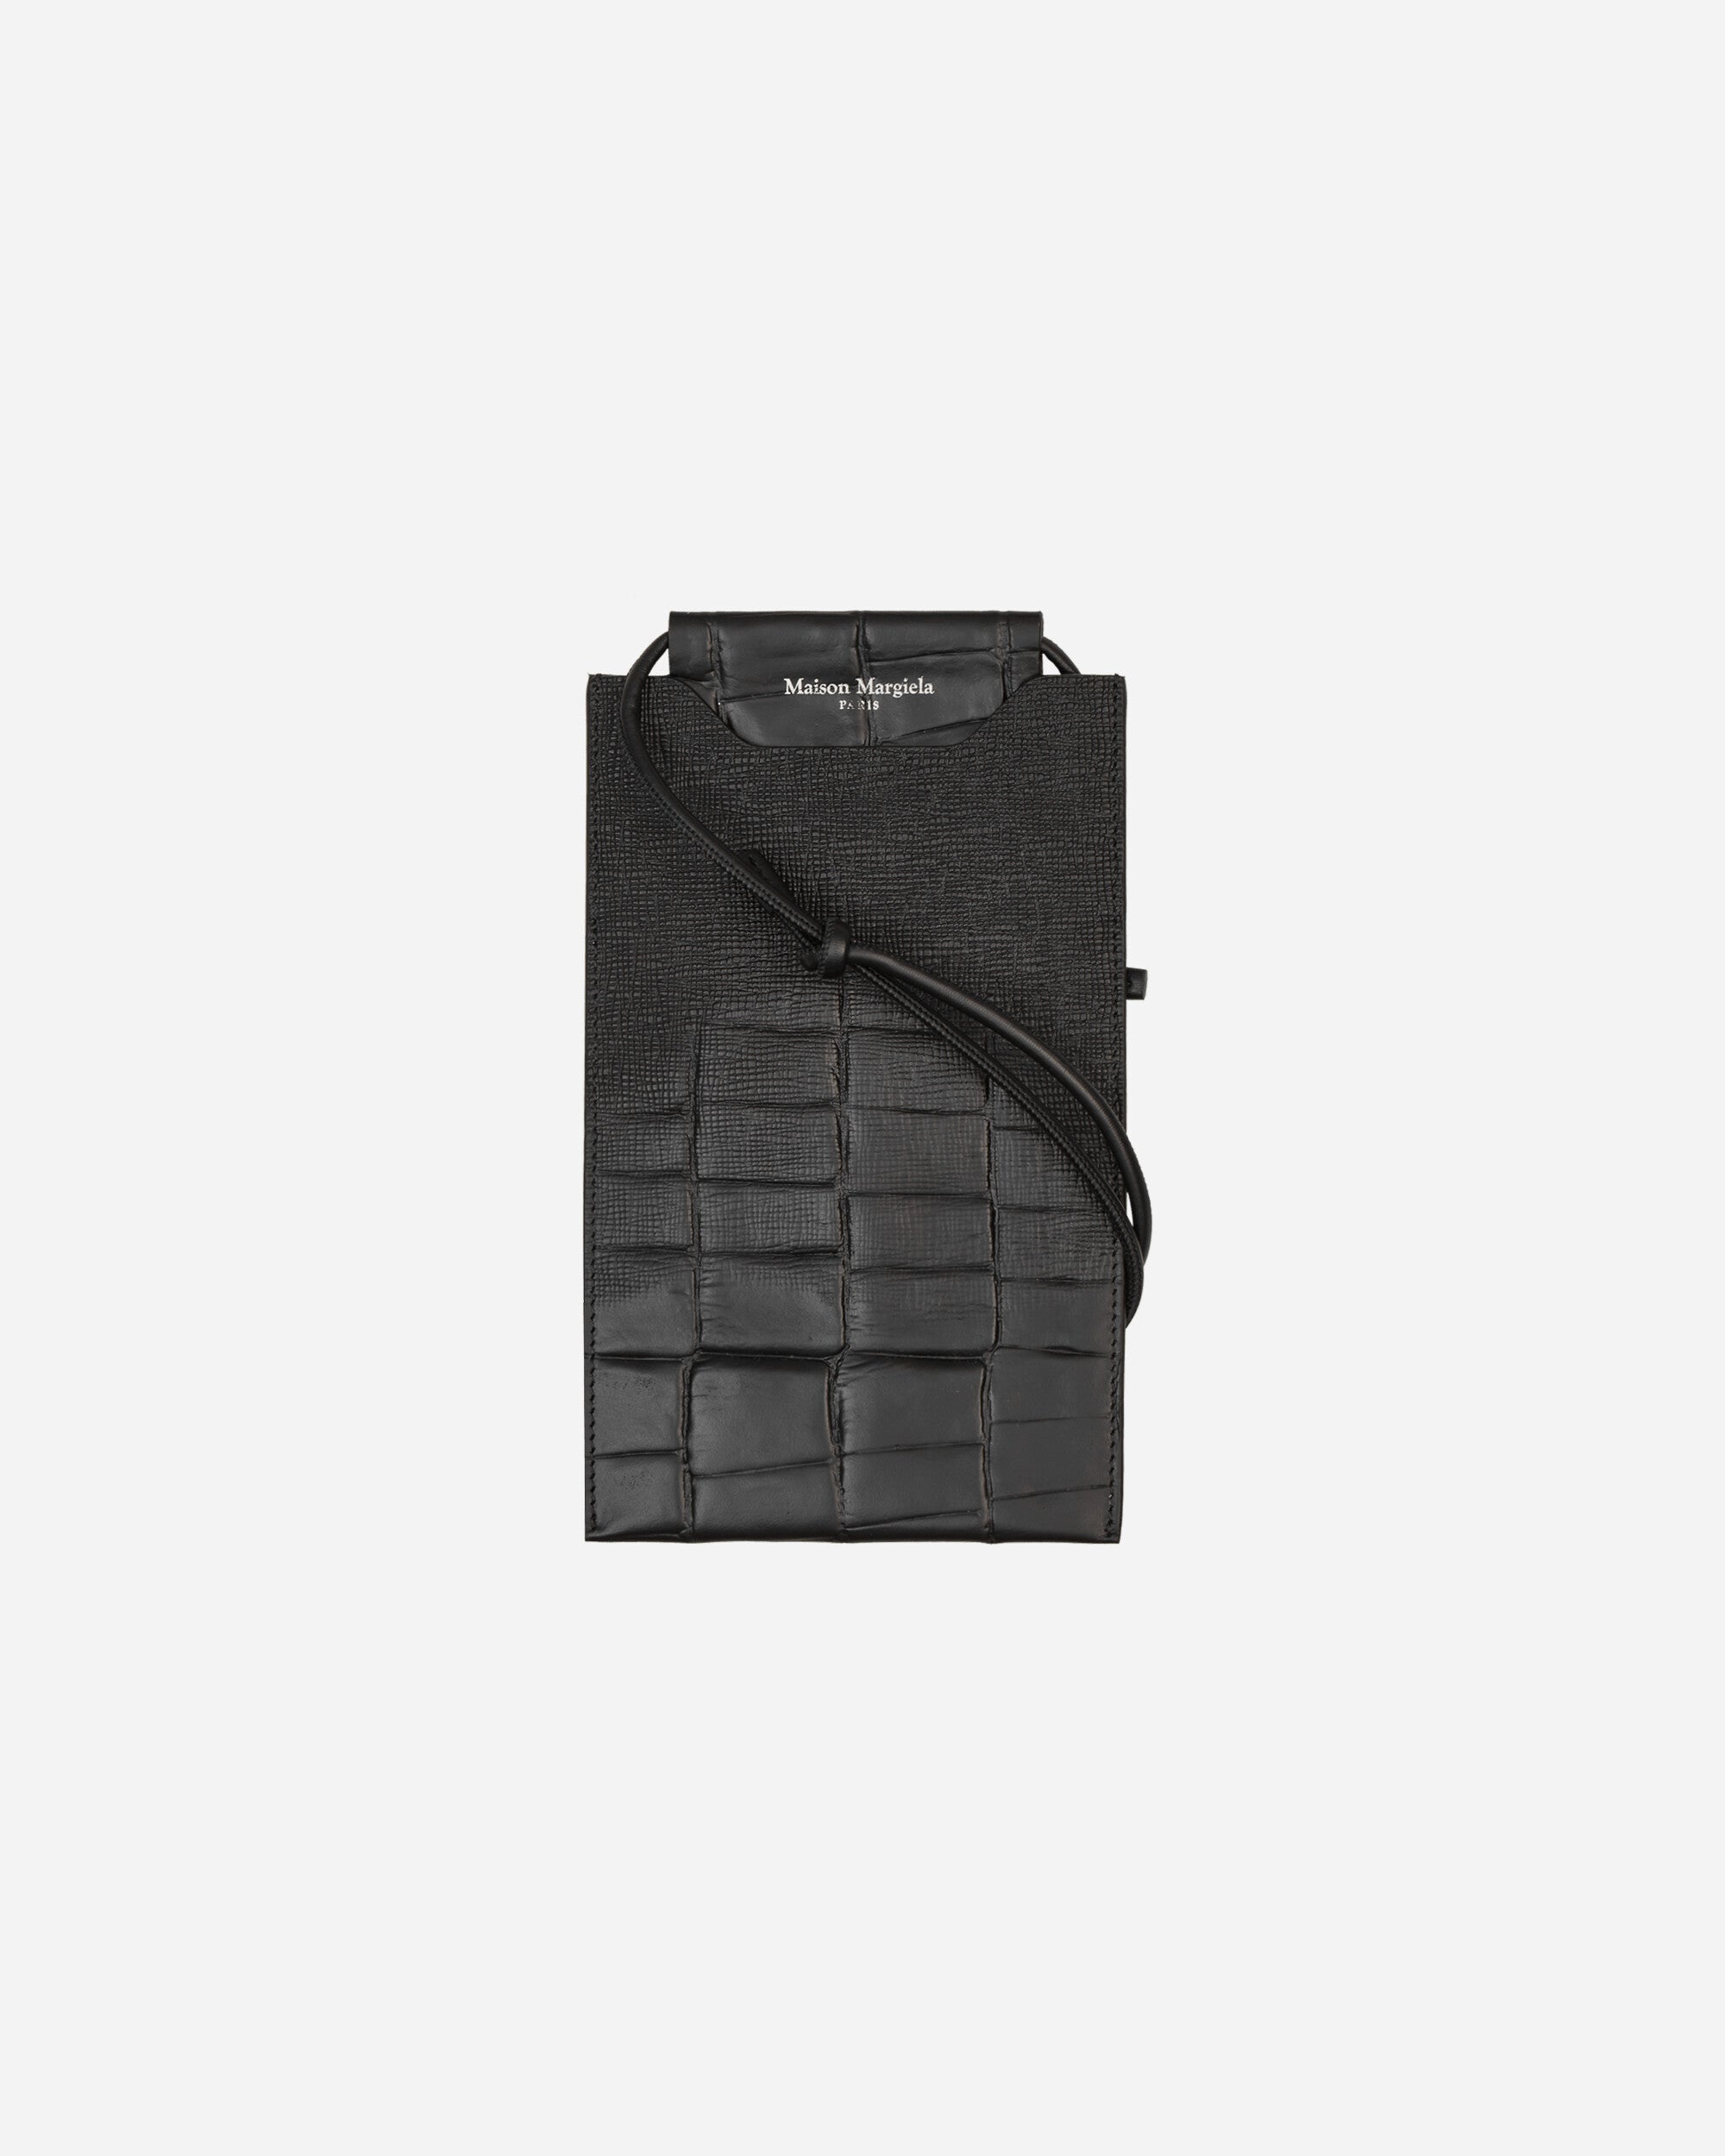 Maison Margiela Phone Neck Pouch Black Bags and Backpacks Pouches SA2VZ0001 T8013